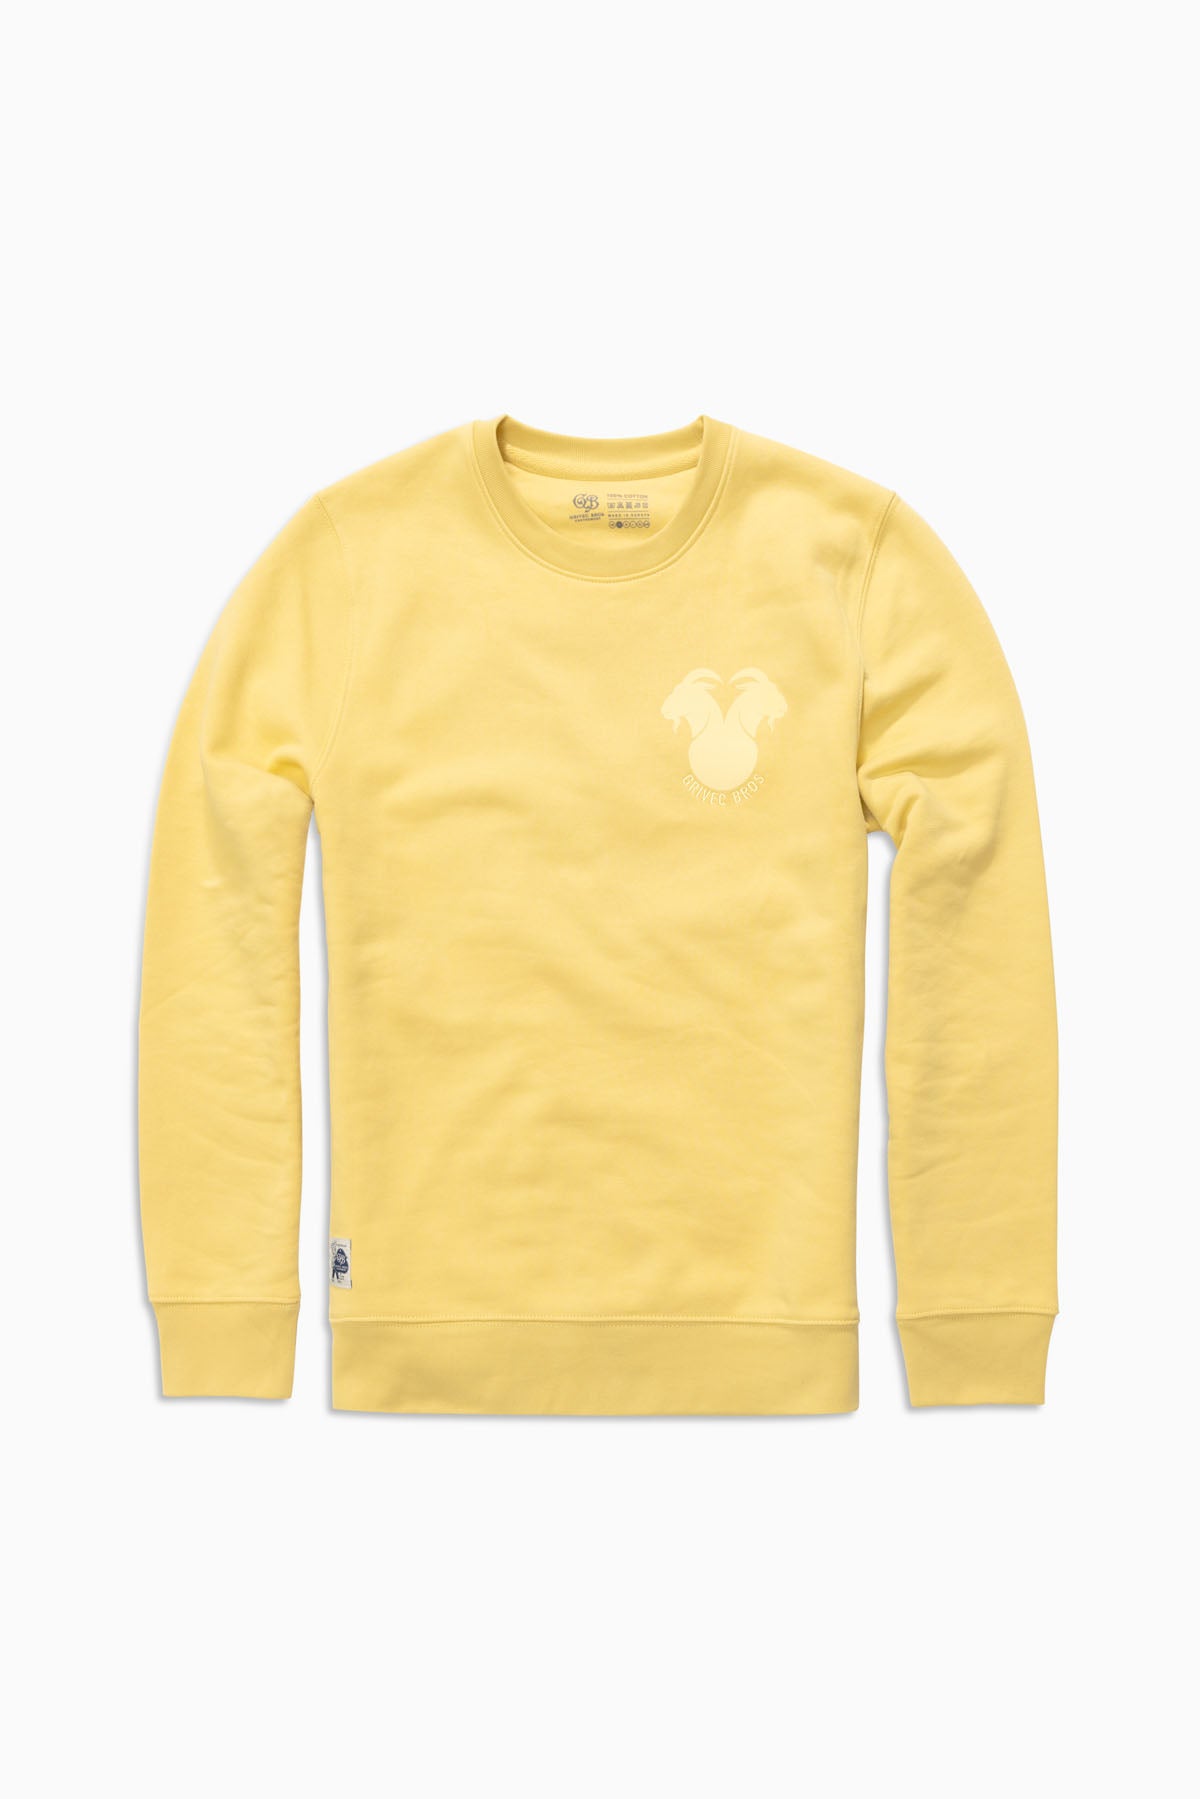 Carpa Sweater Mellow Yellow